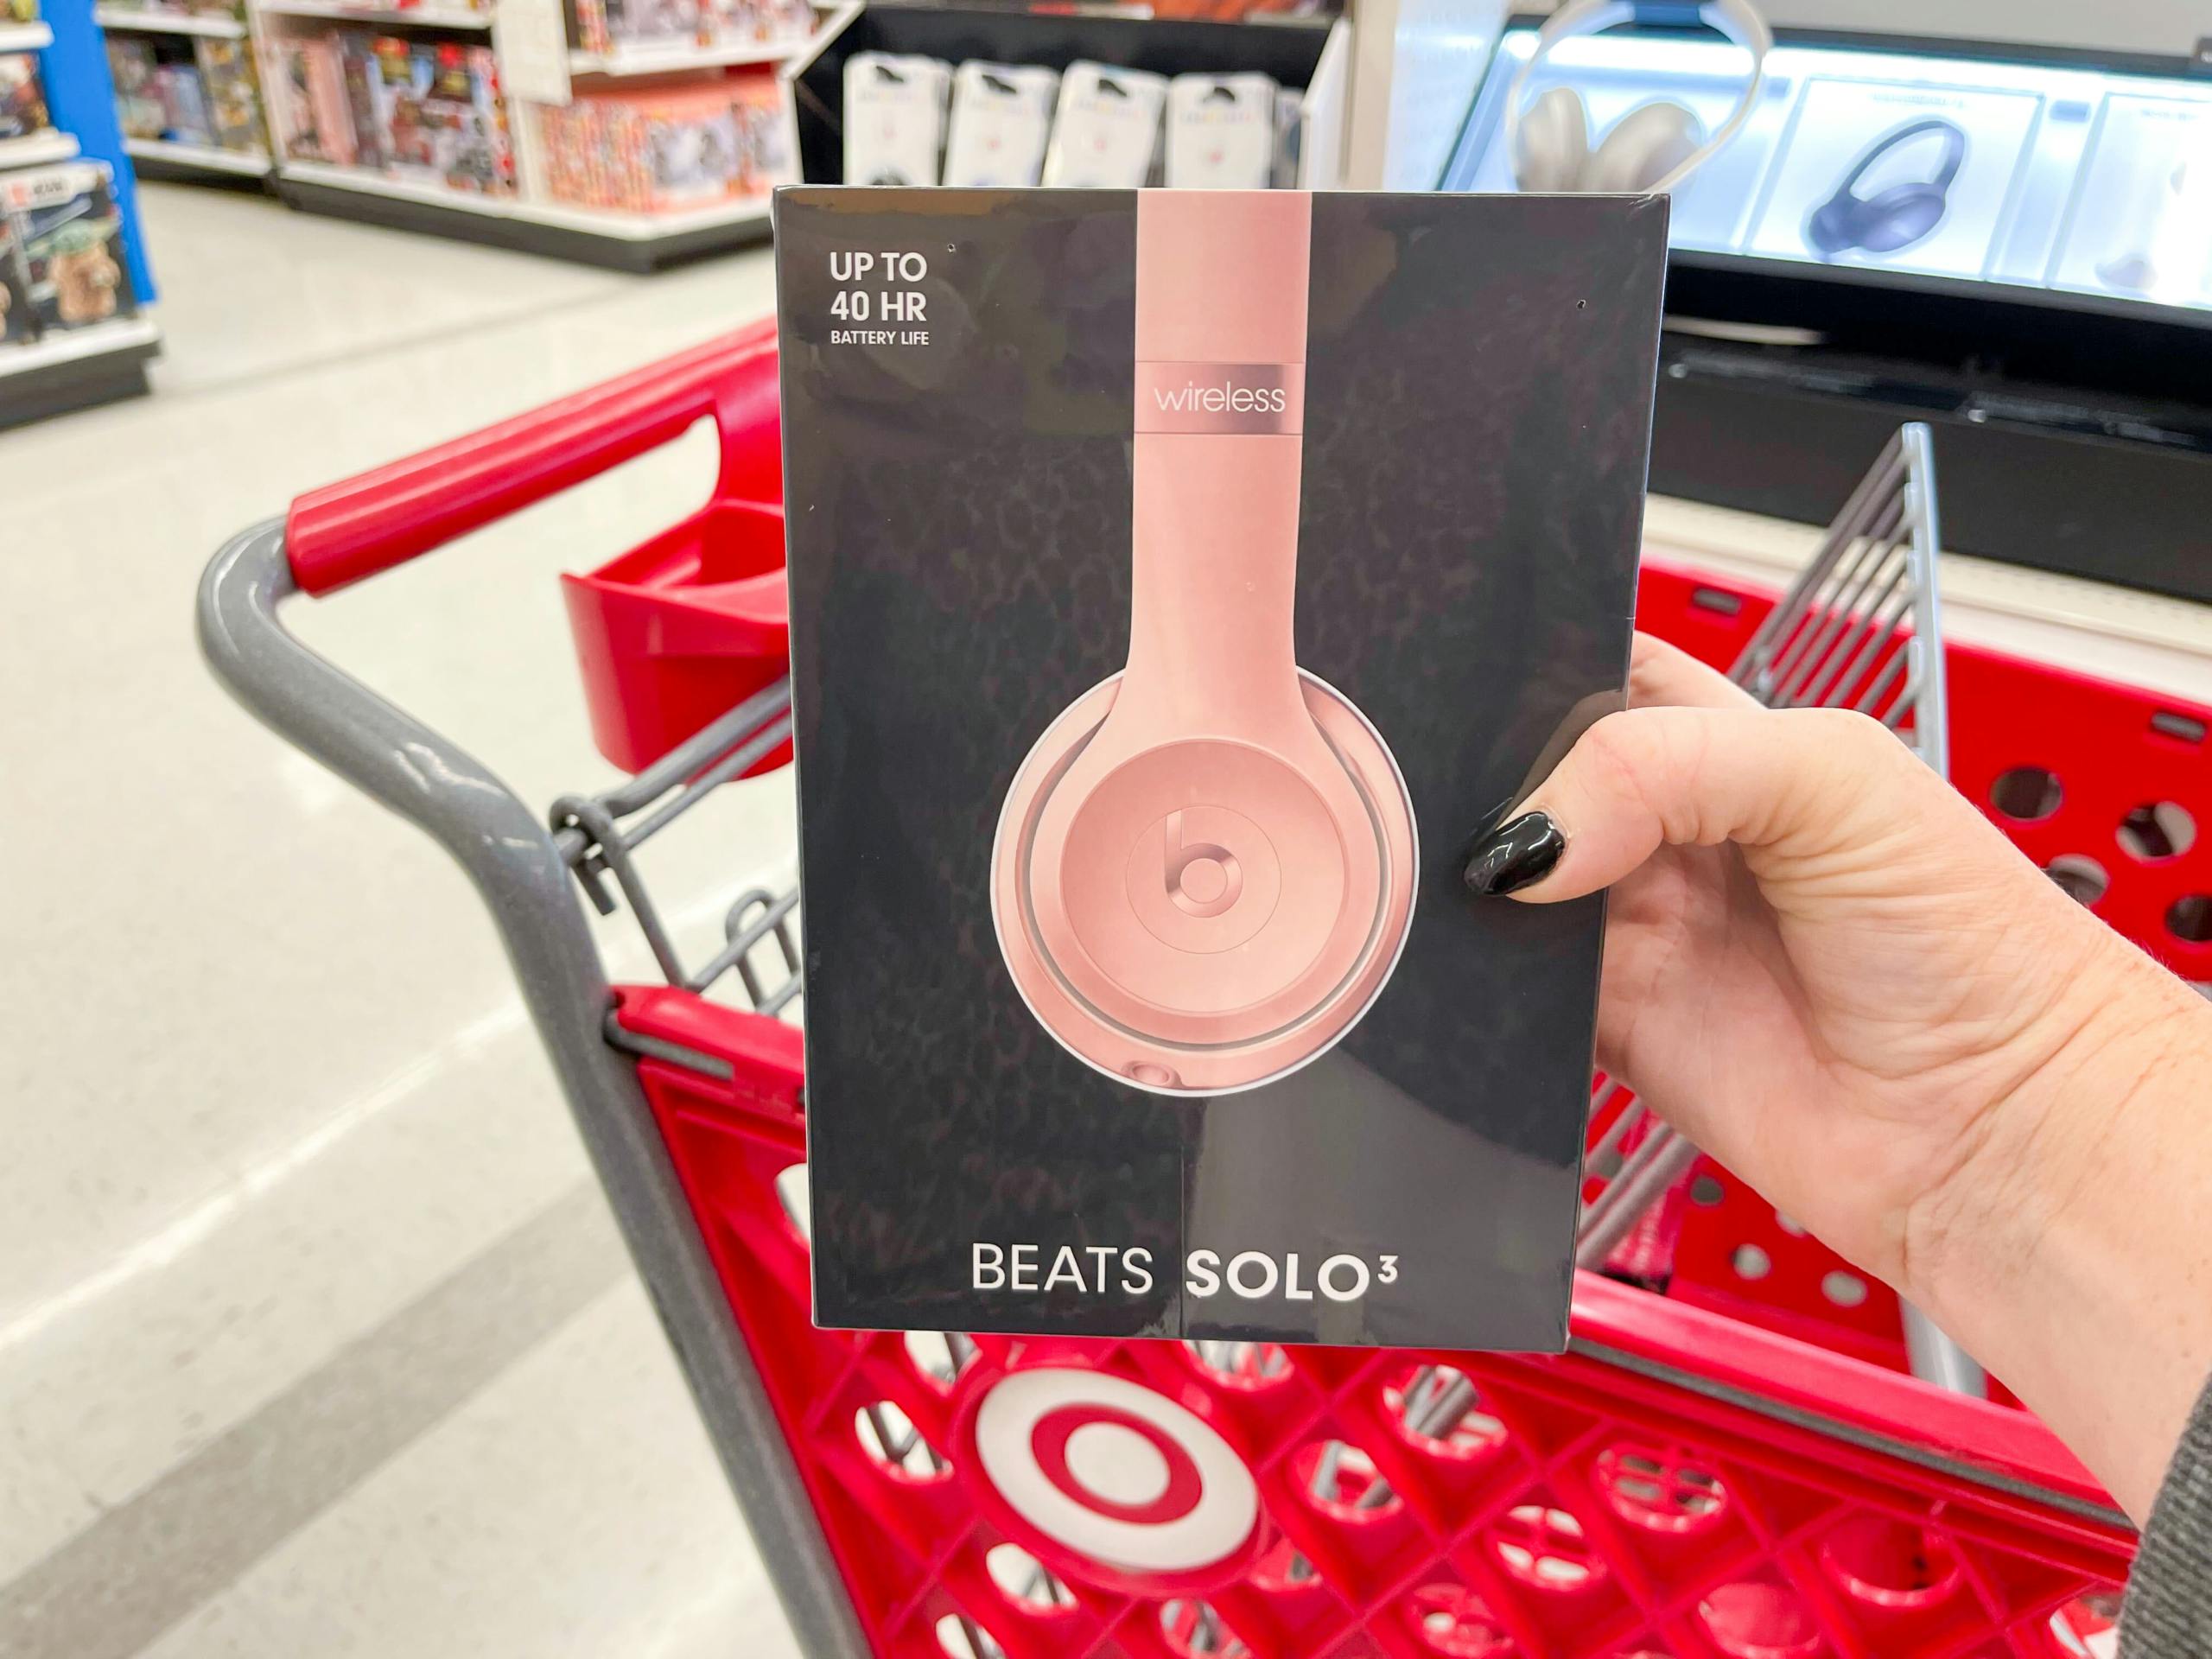 Beats Wireless nike pegasus black friday Headphones, Only $85.49 at Target — Better Than